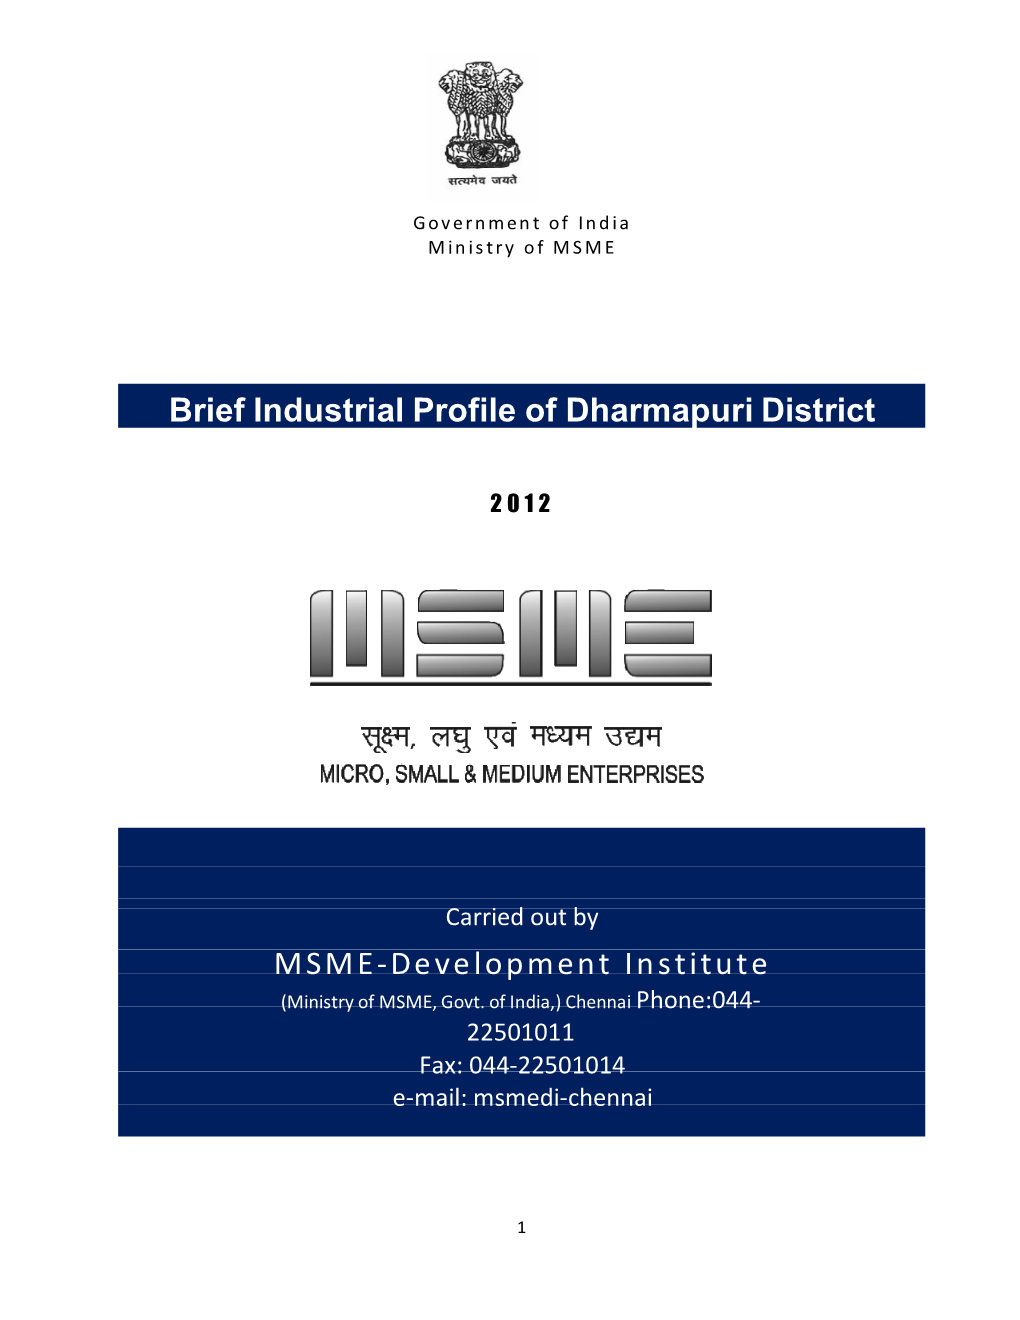 Brief Industrial Profile of Dharmapuri District